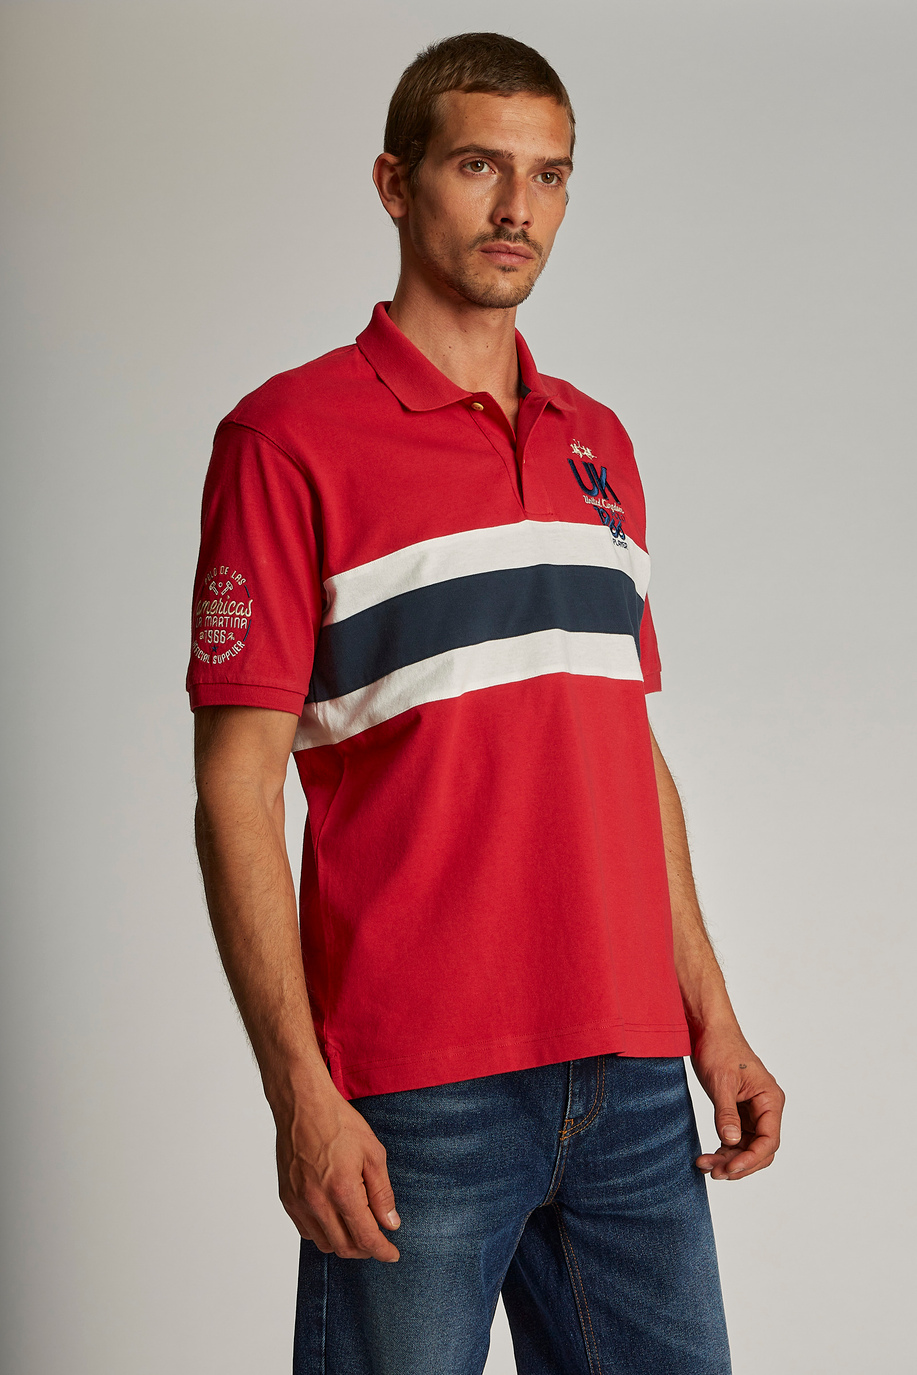 Herren-Poloshirt mit kurzem Arm aus 100 % Baumwolle, oversized Modell - -50% | archive | La Martina - Official Online Shop